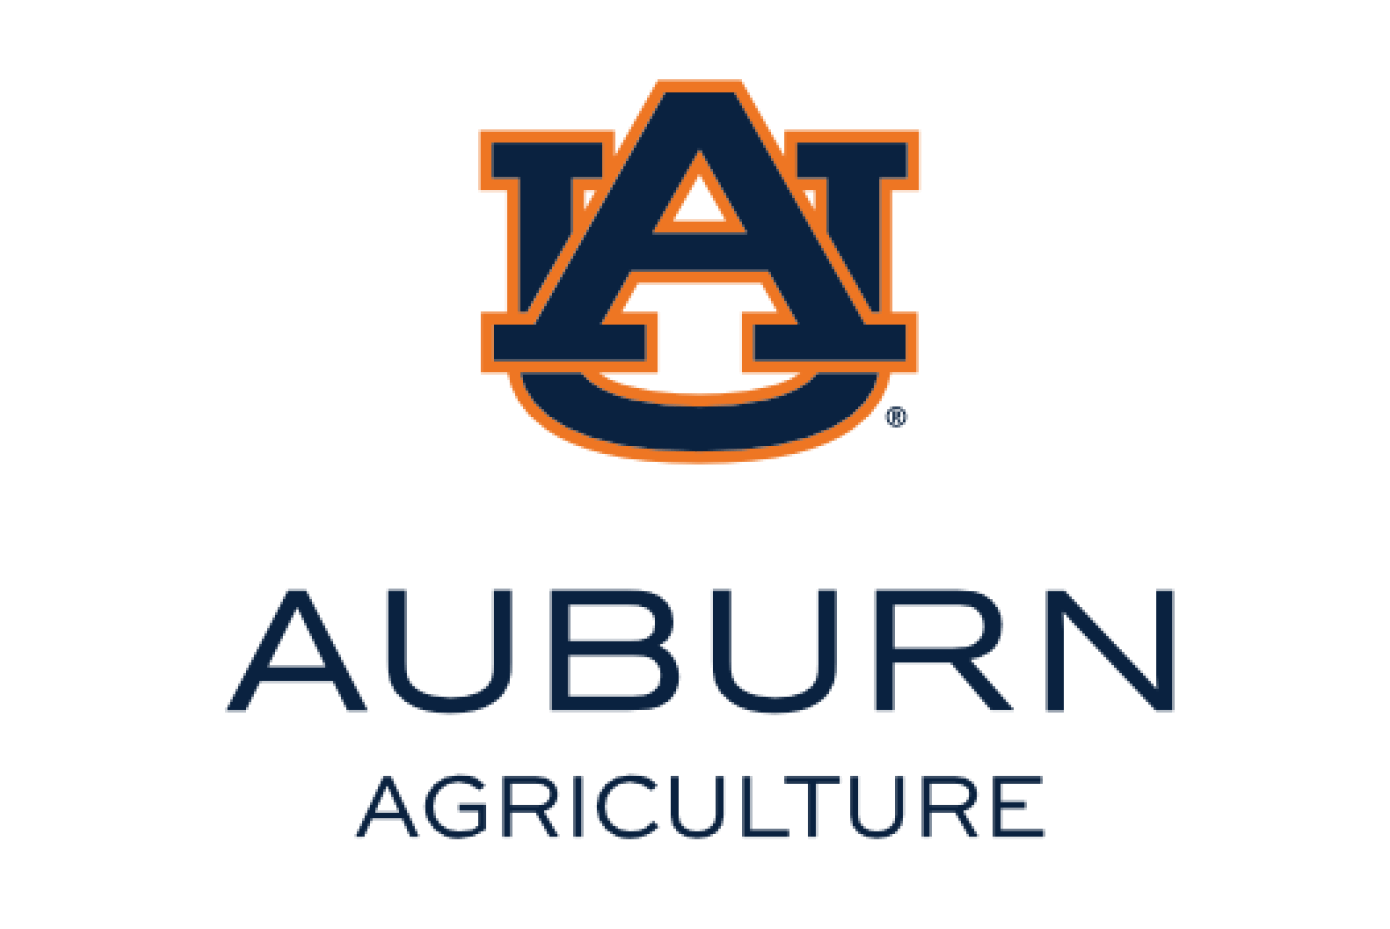 Auburn University Agriculture logo